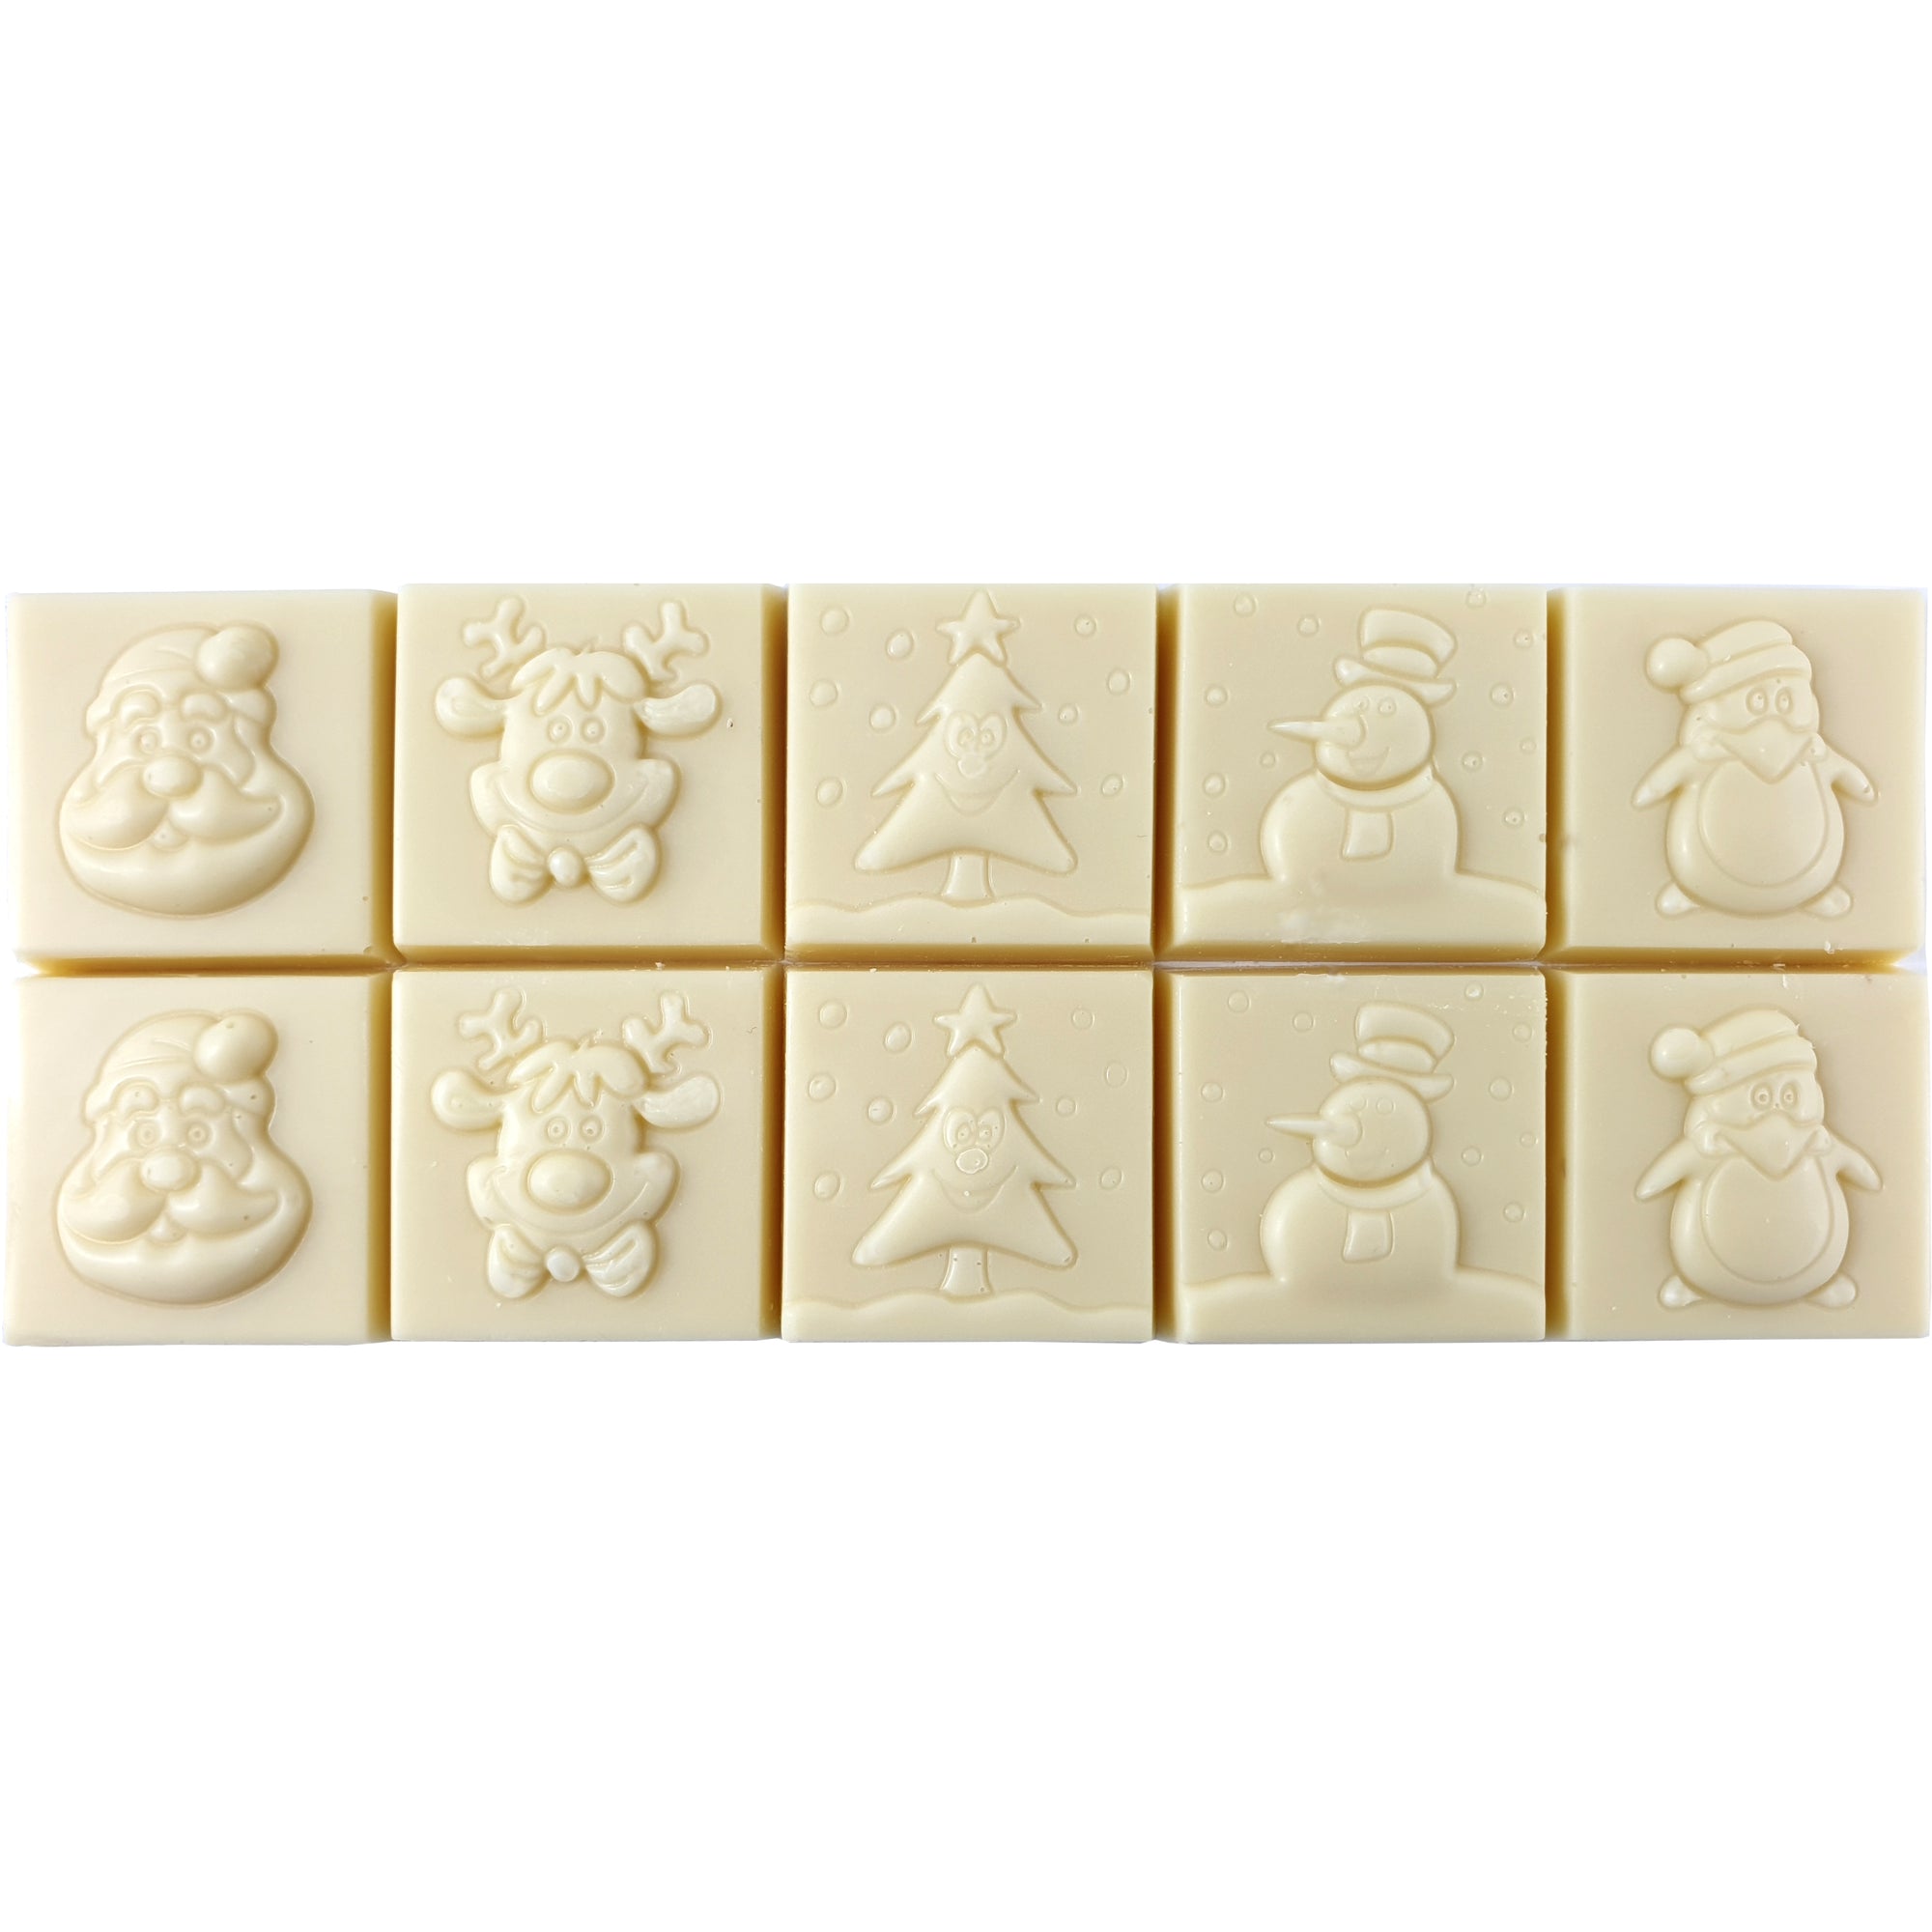 Christmas Square Chocolates 10 pack - White chocolate